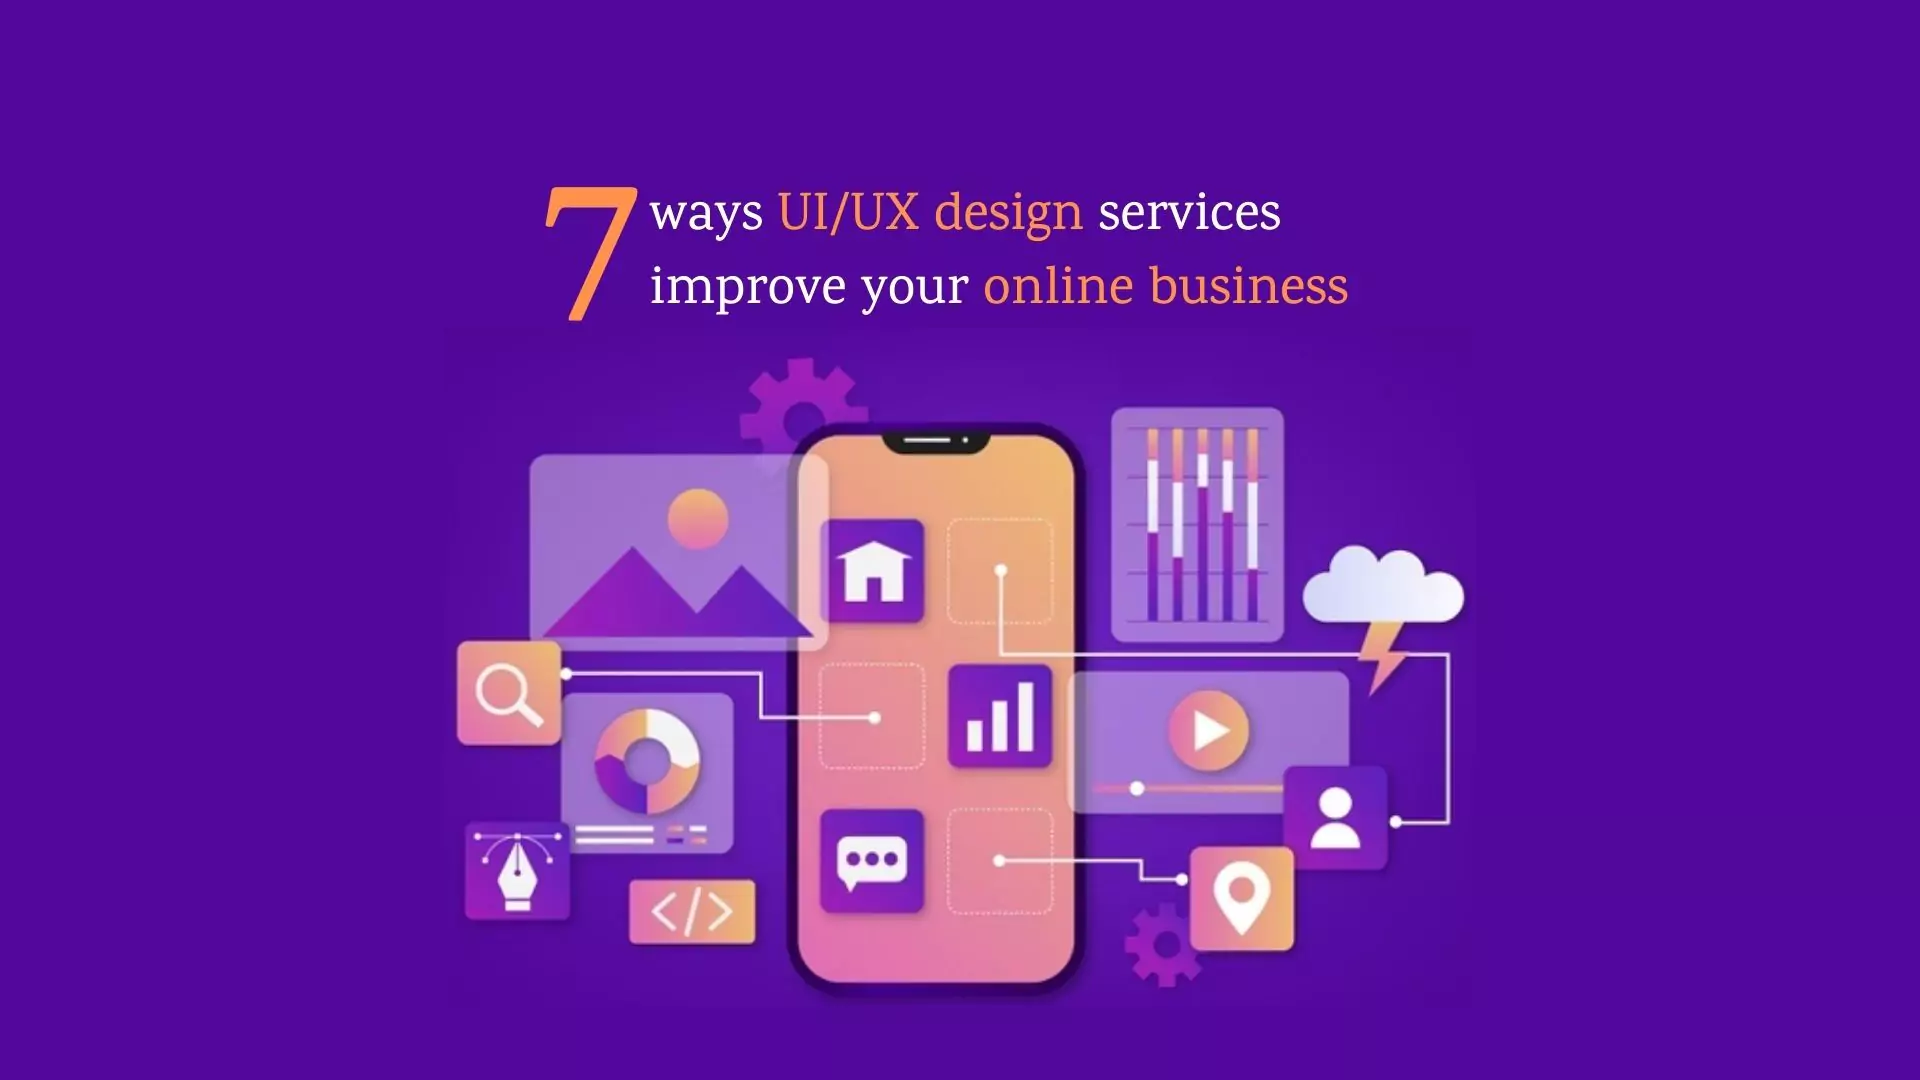 7ways UI/UX design services improve your online business